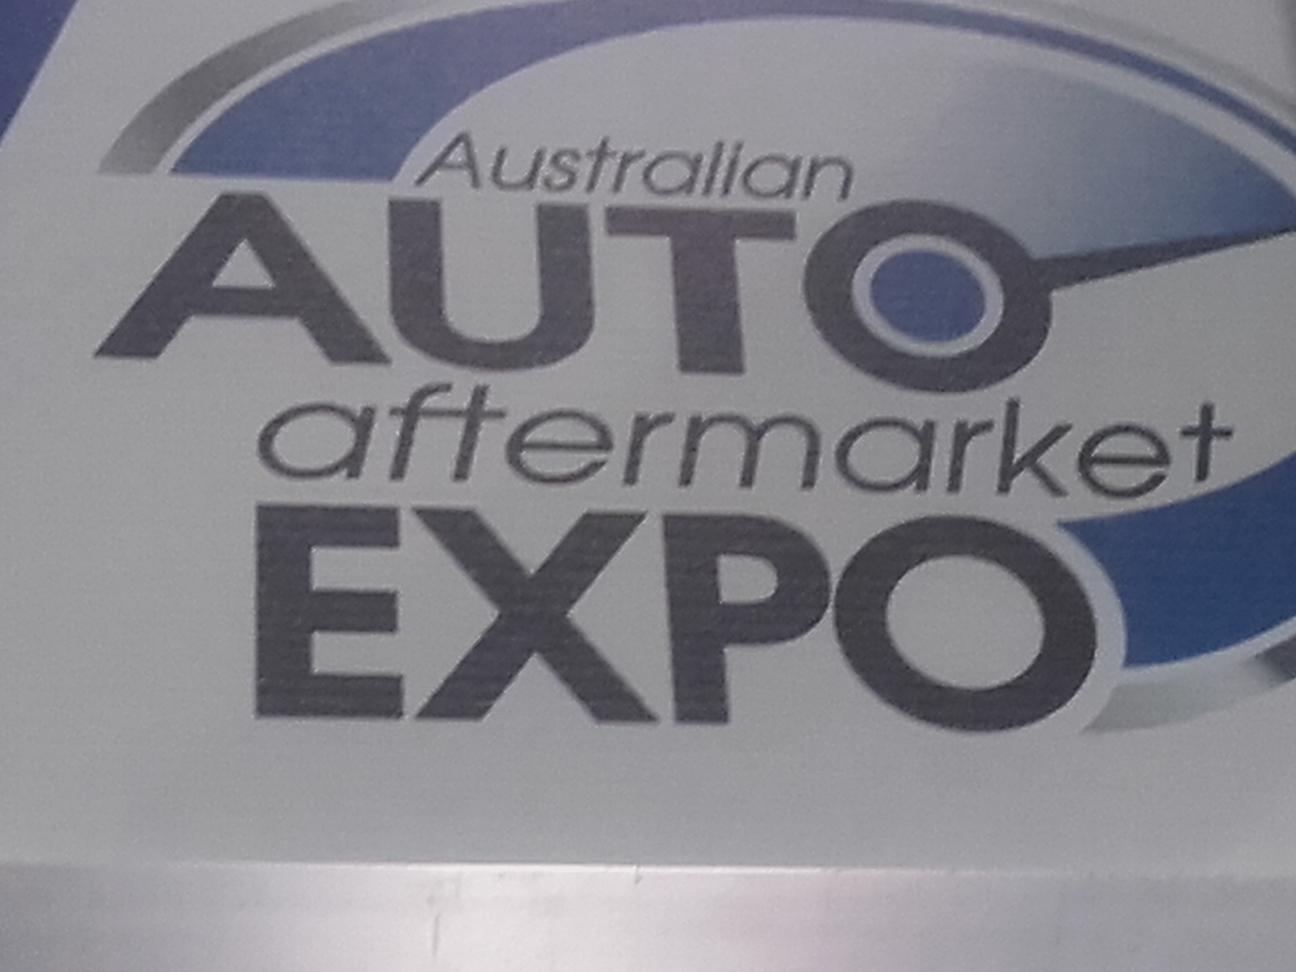 Auto Expo Australia 2017